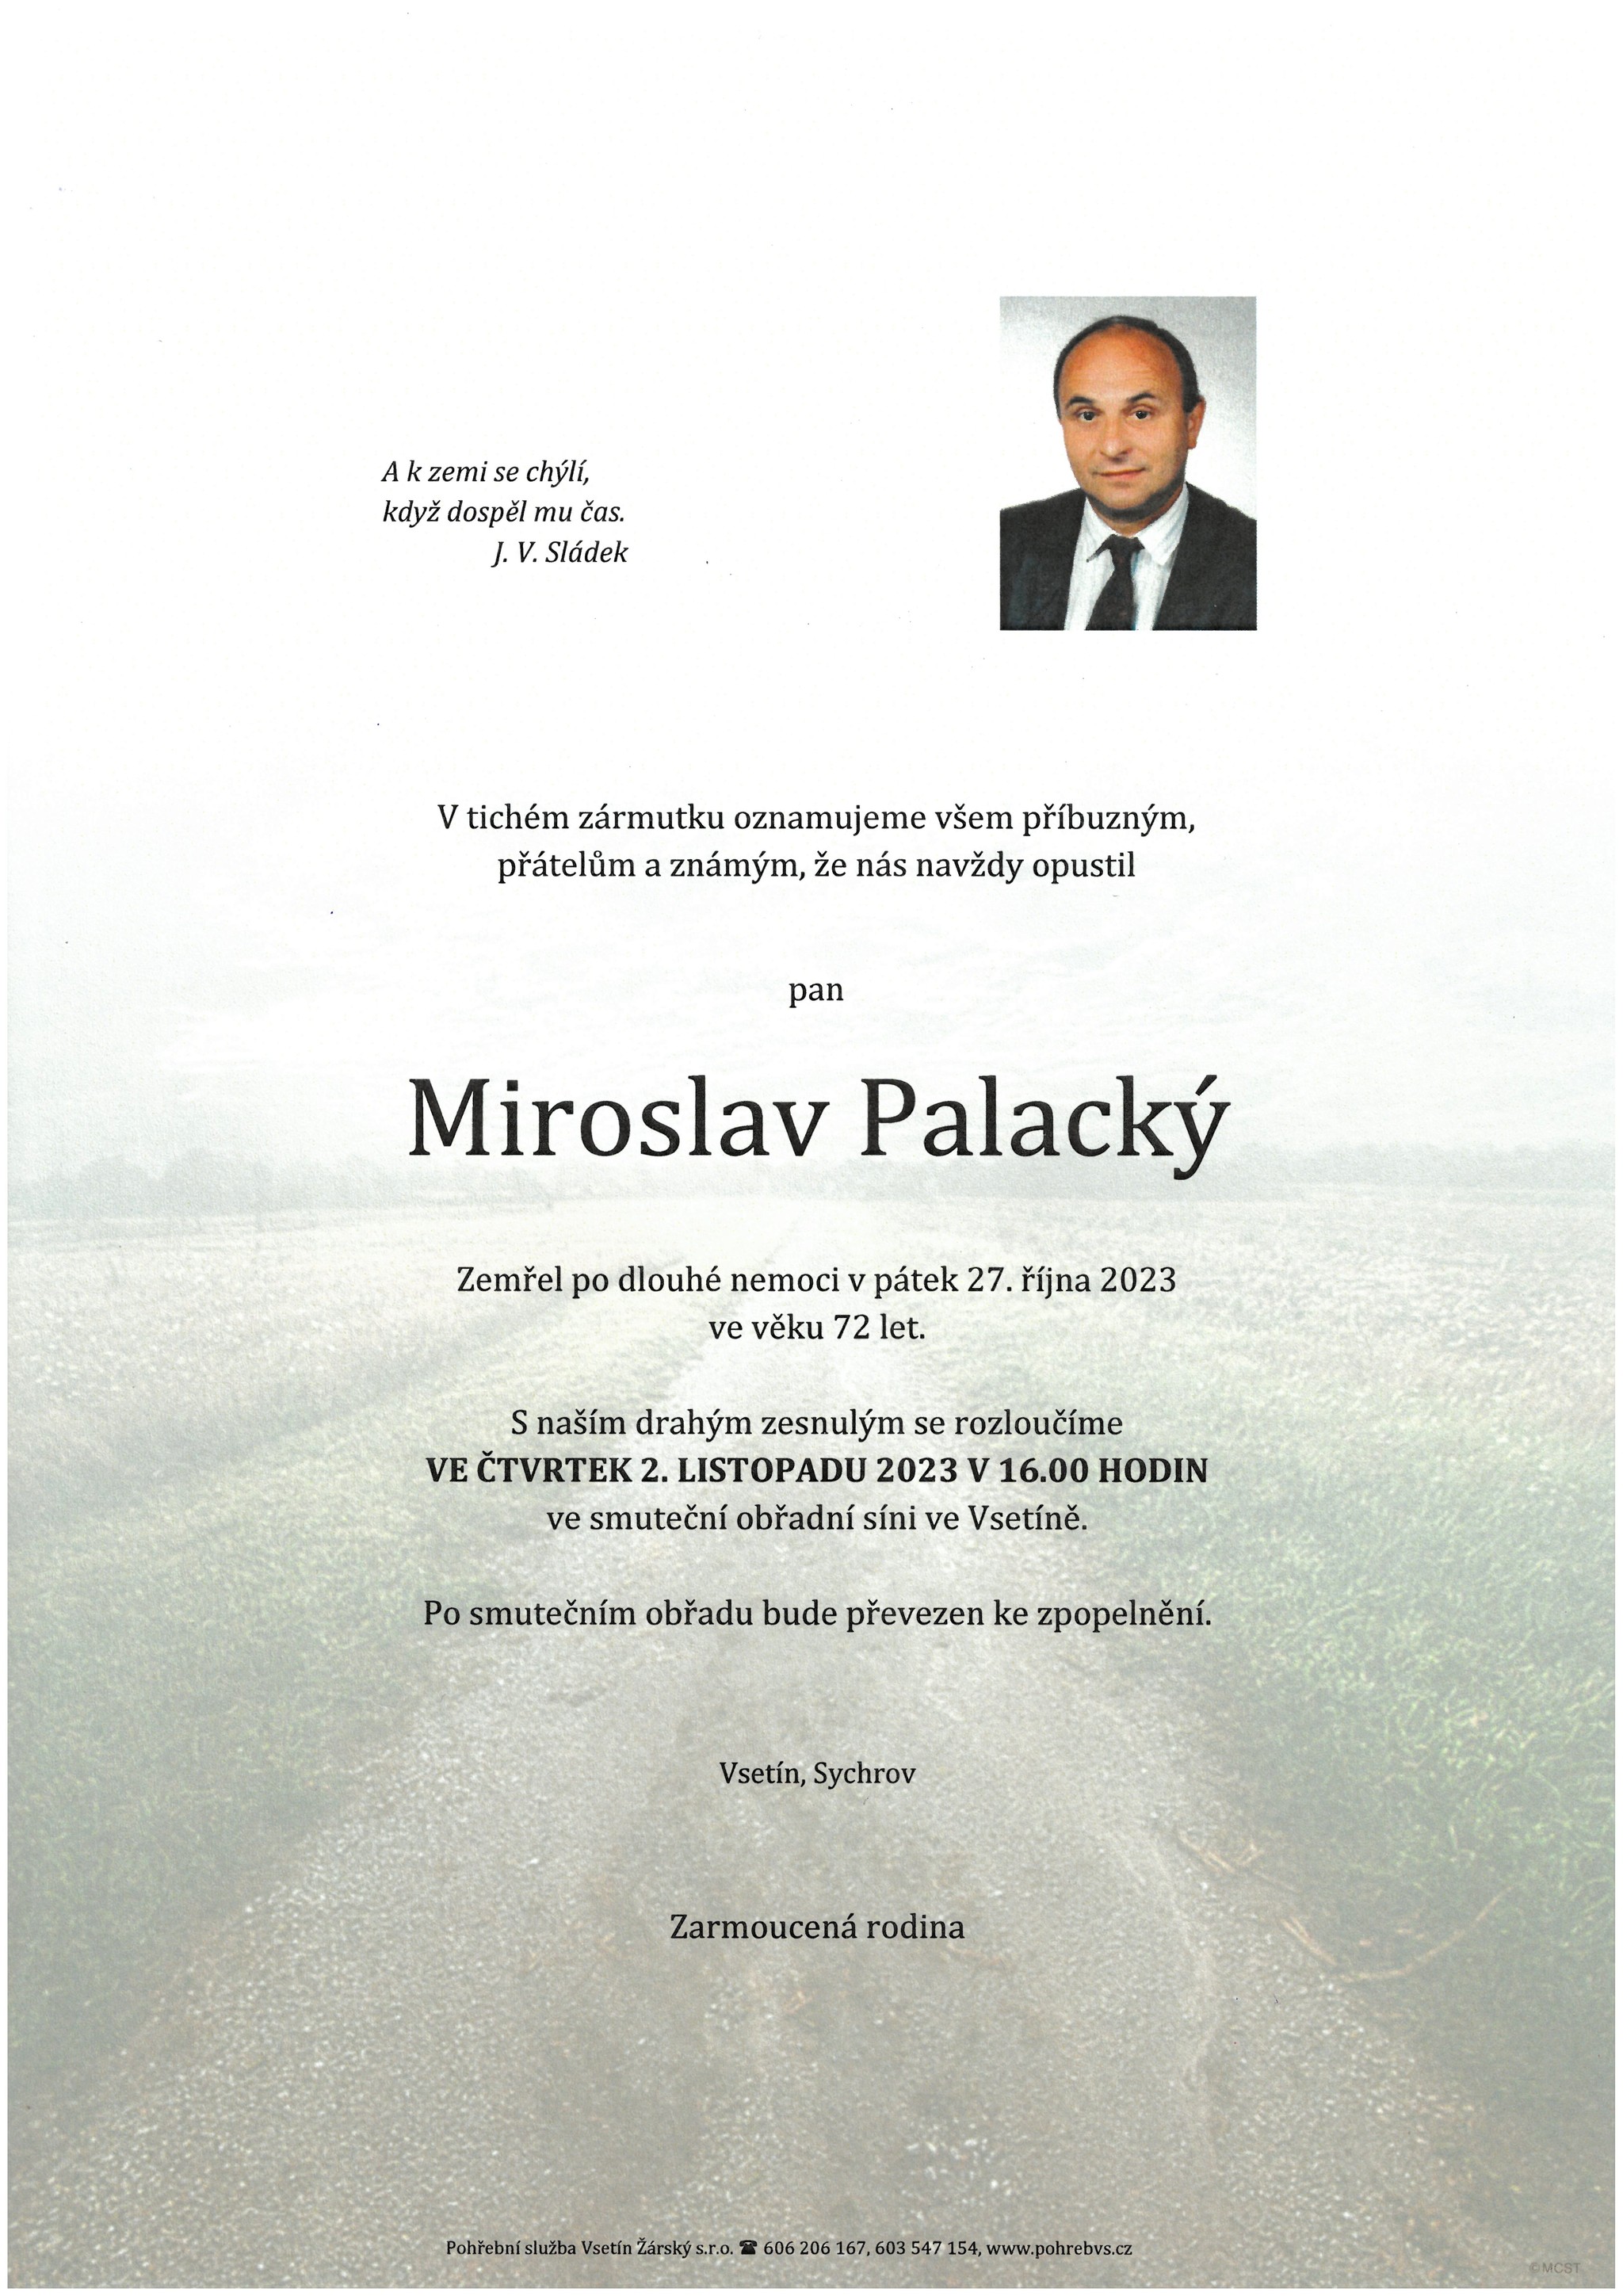 Miroslav Palacký